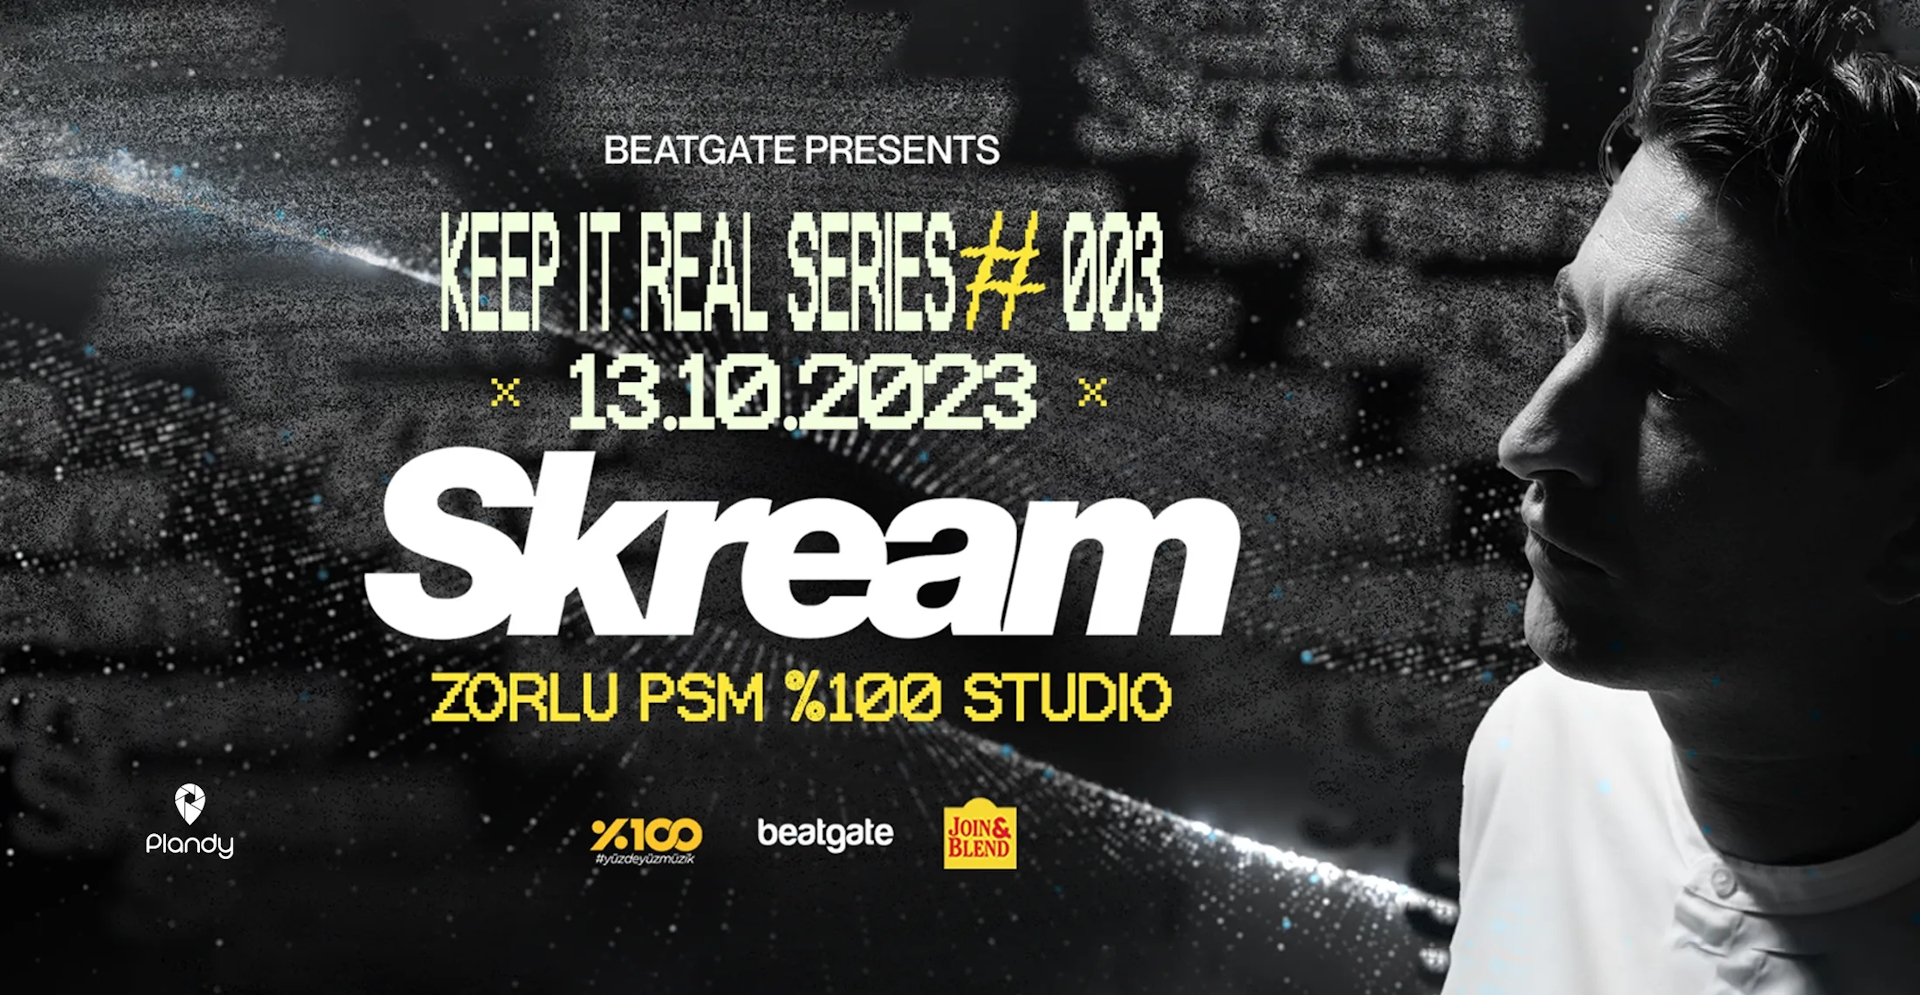 Beatgate w/ Skream // Keep It Real Series #003